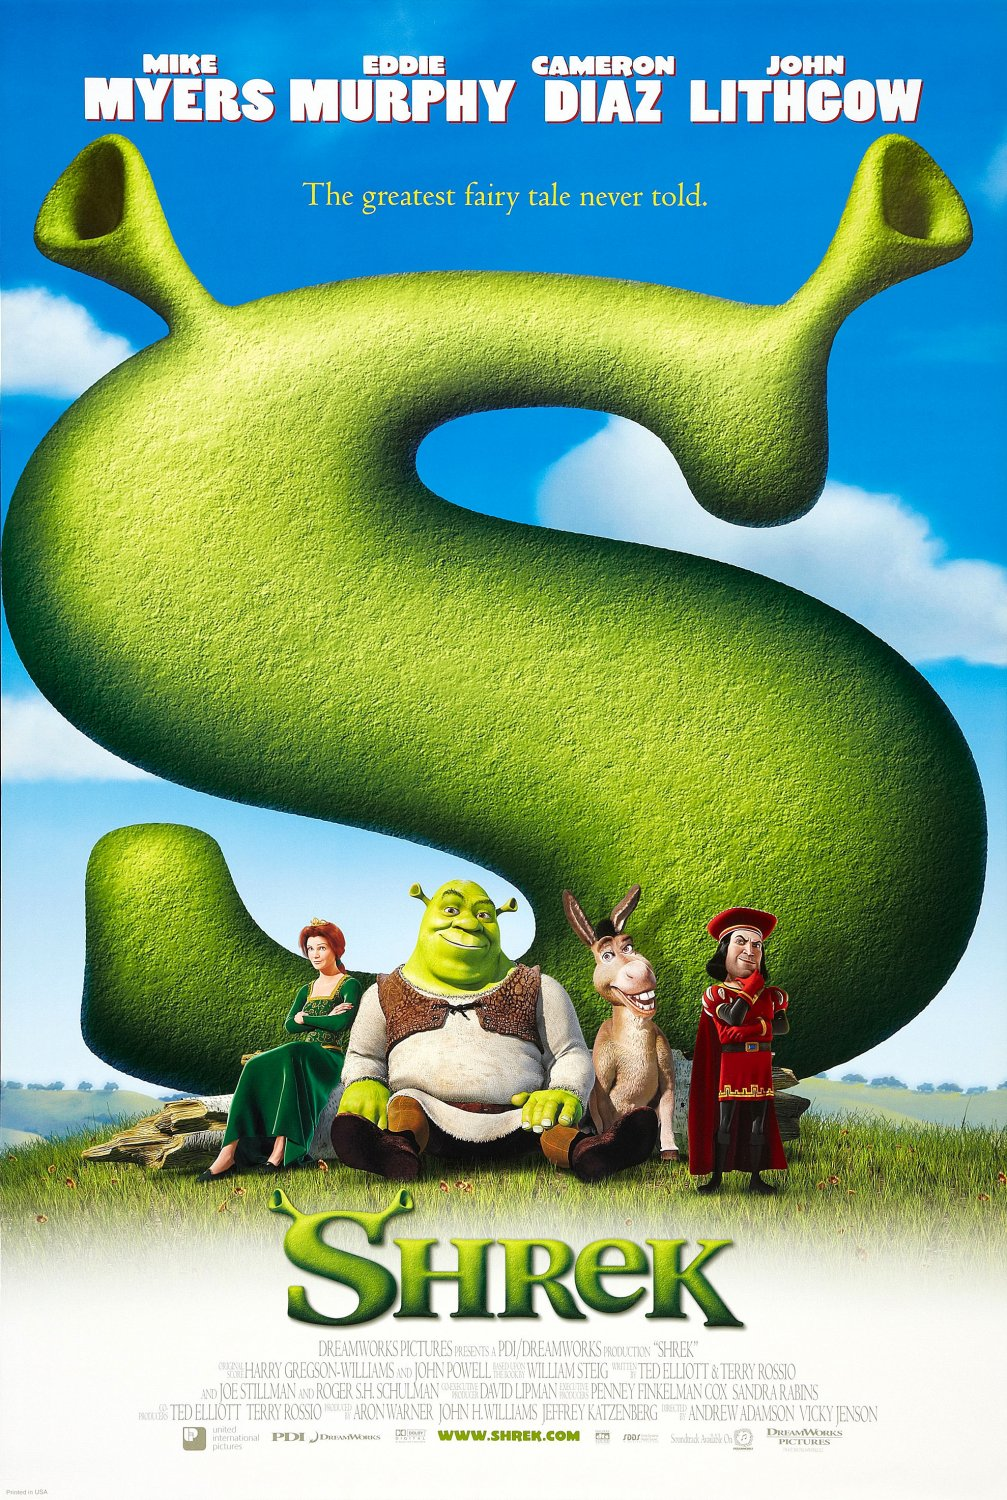 Best Christmas animated movies - 
Shrek